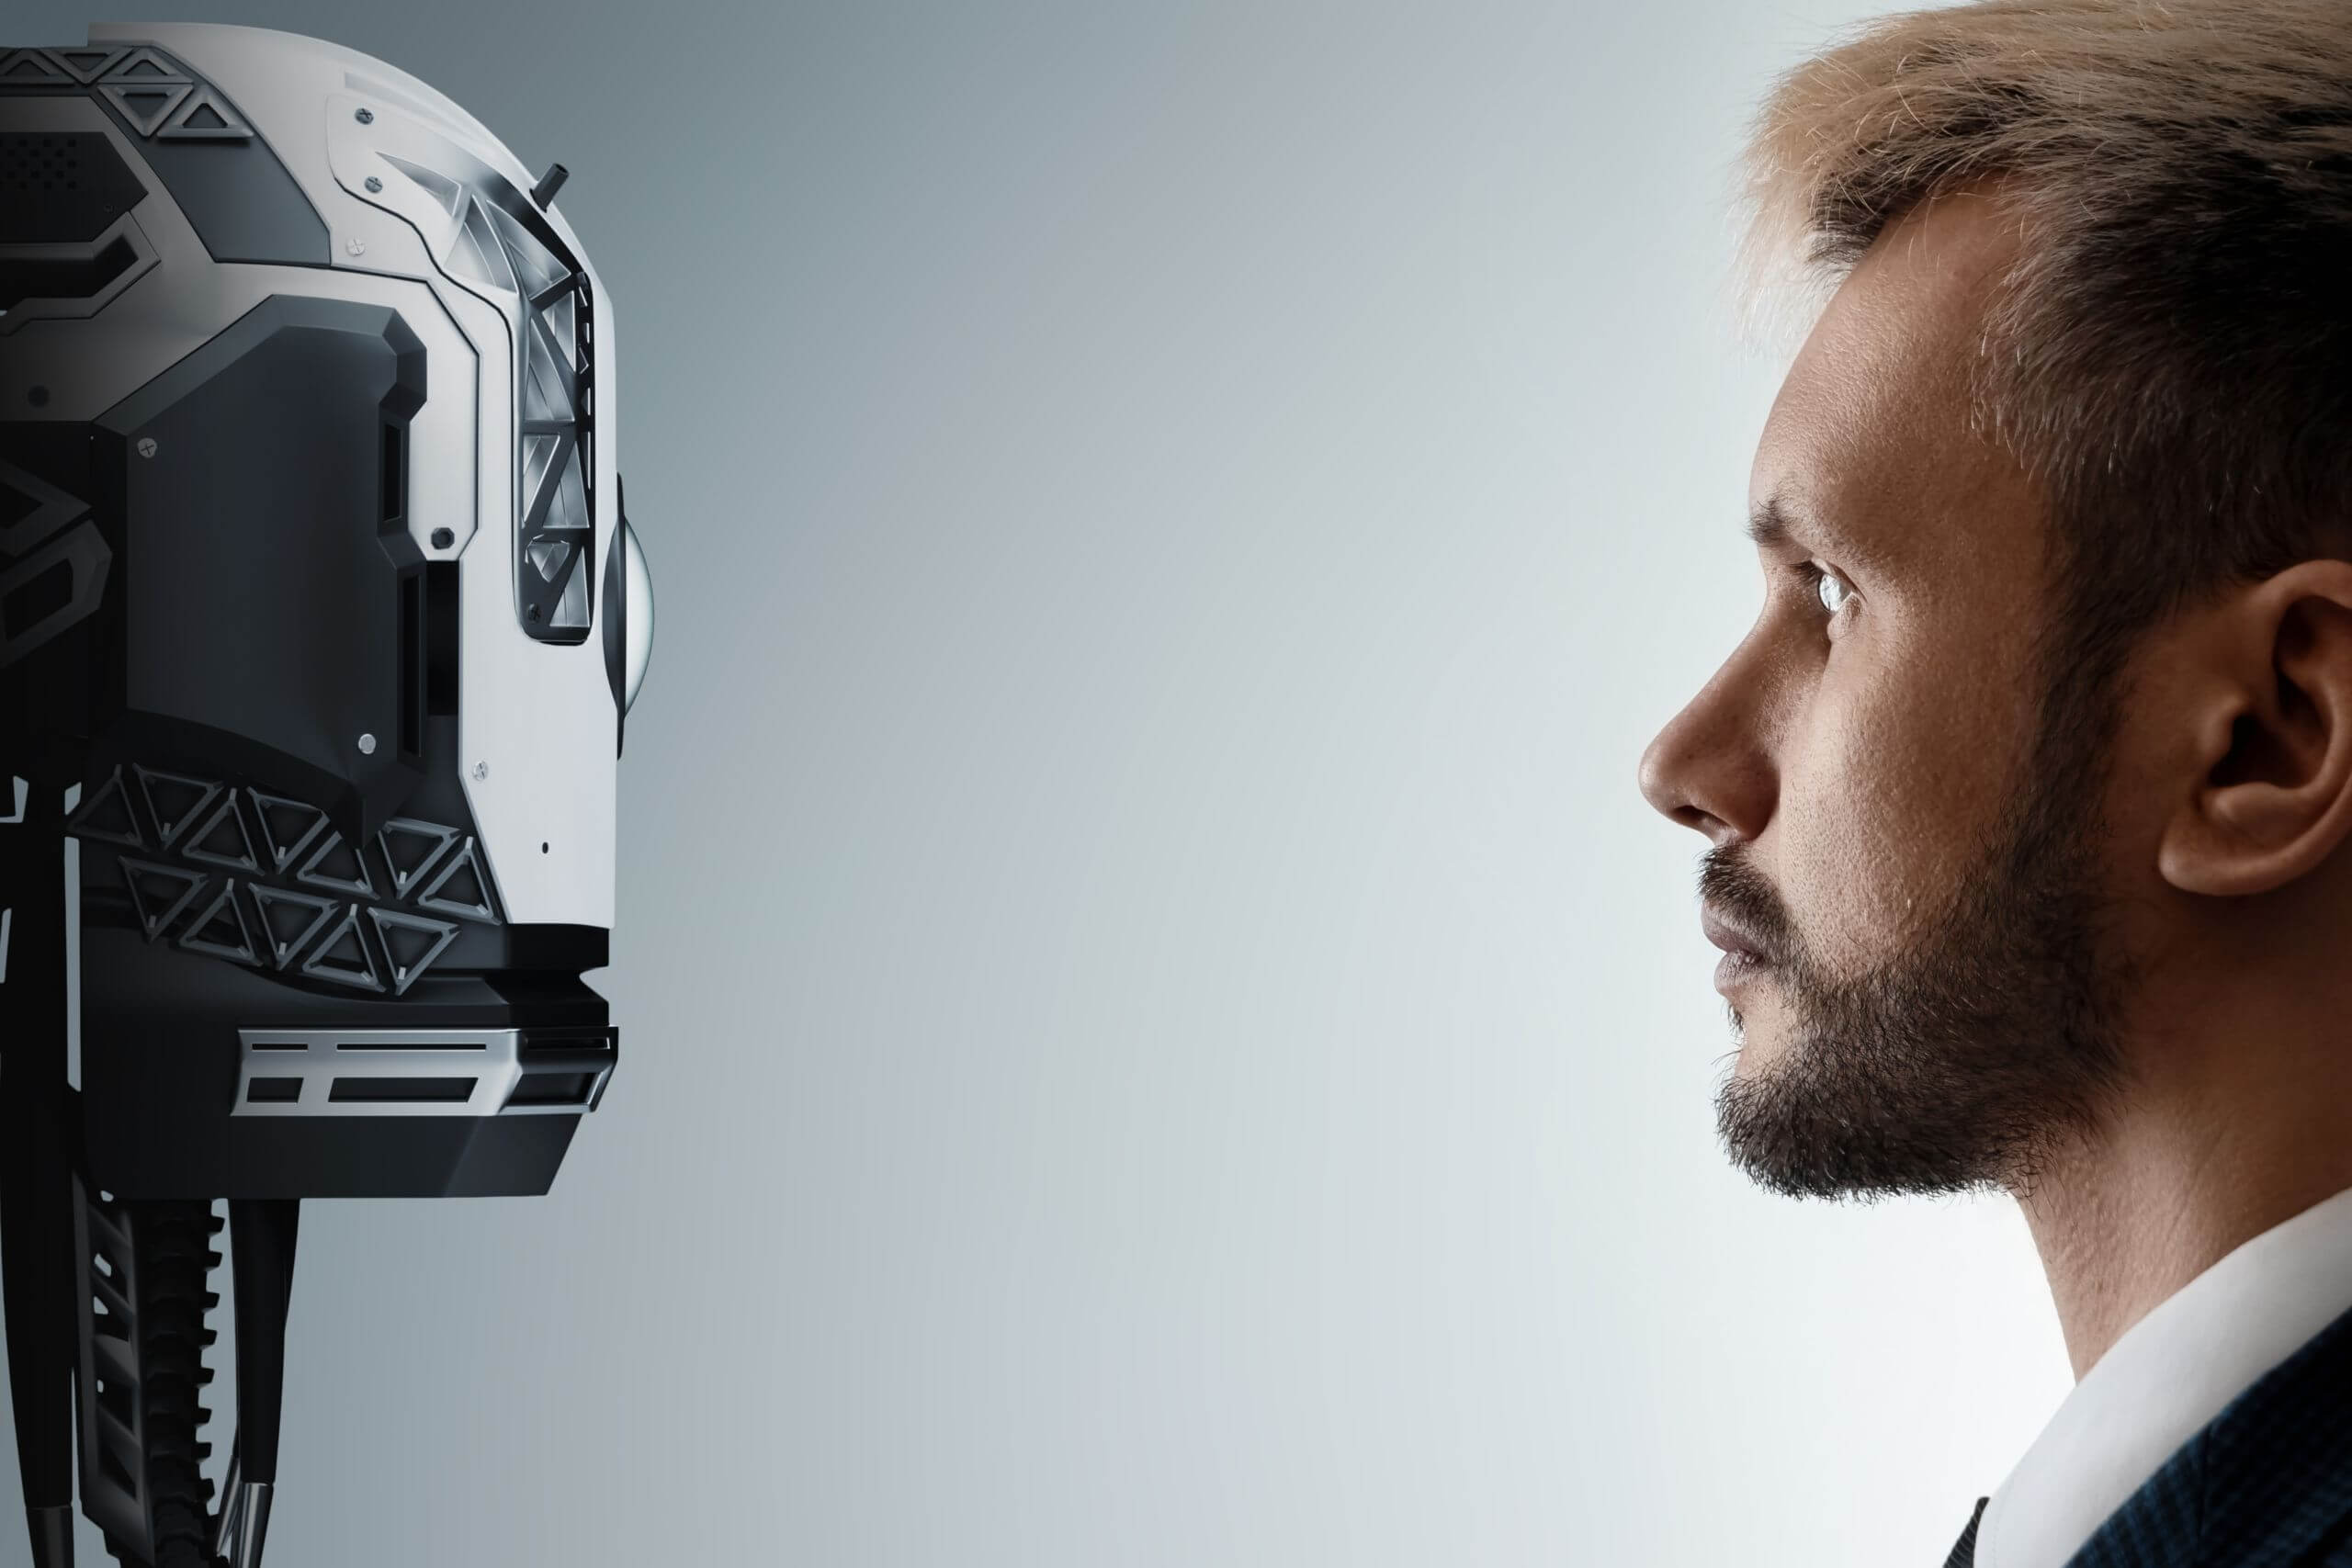 Robot and a Man Face to Face